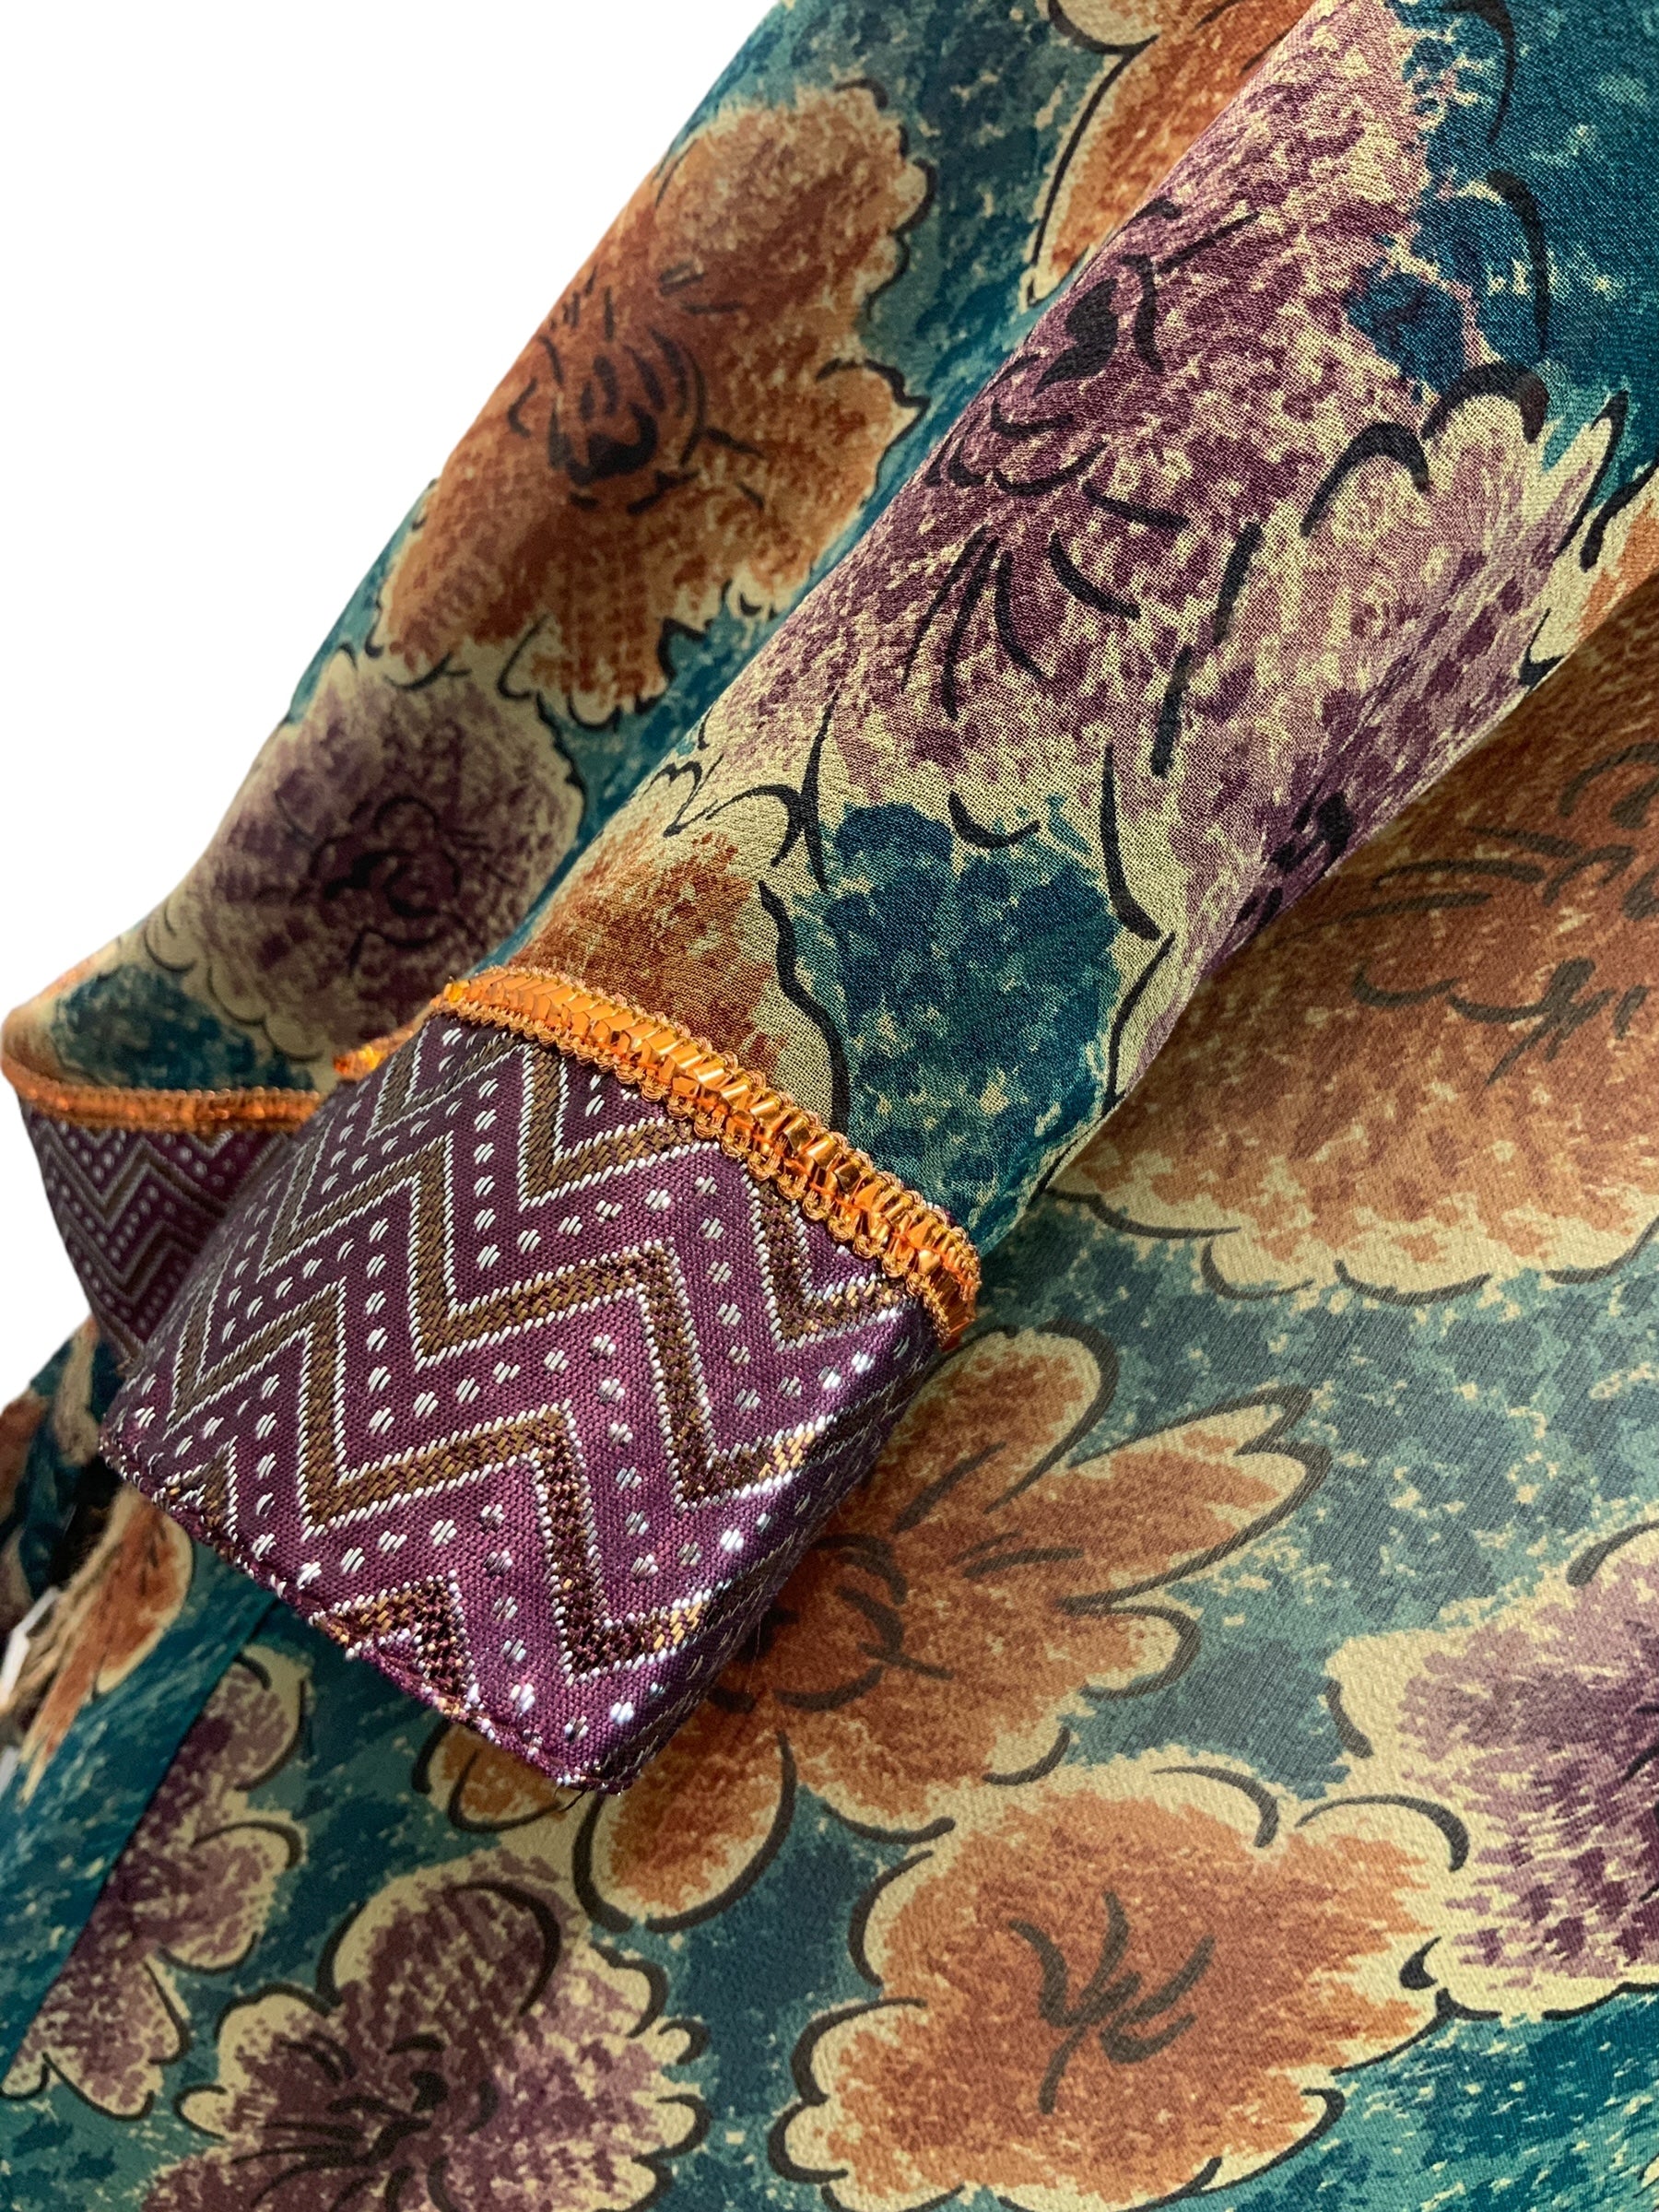 PRG1268 Kate Bushy Sheer Avatar Pure Silk Kimono-Sleeved Jacket with Belt